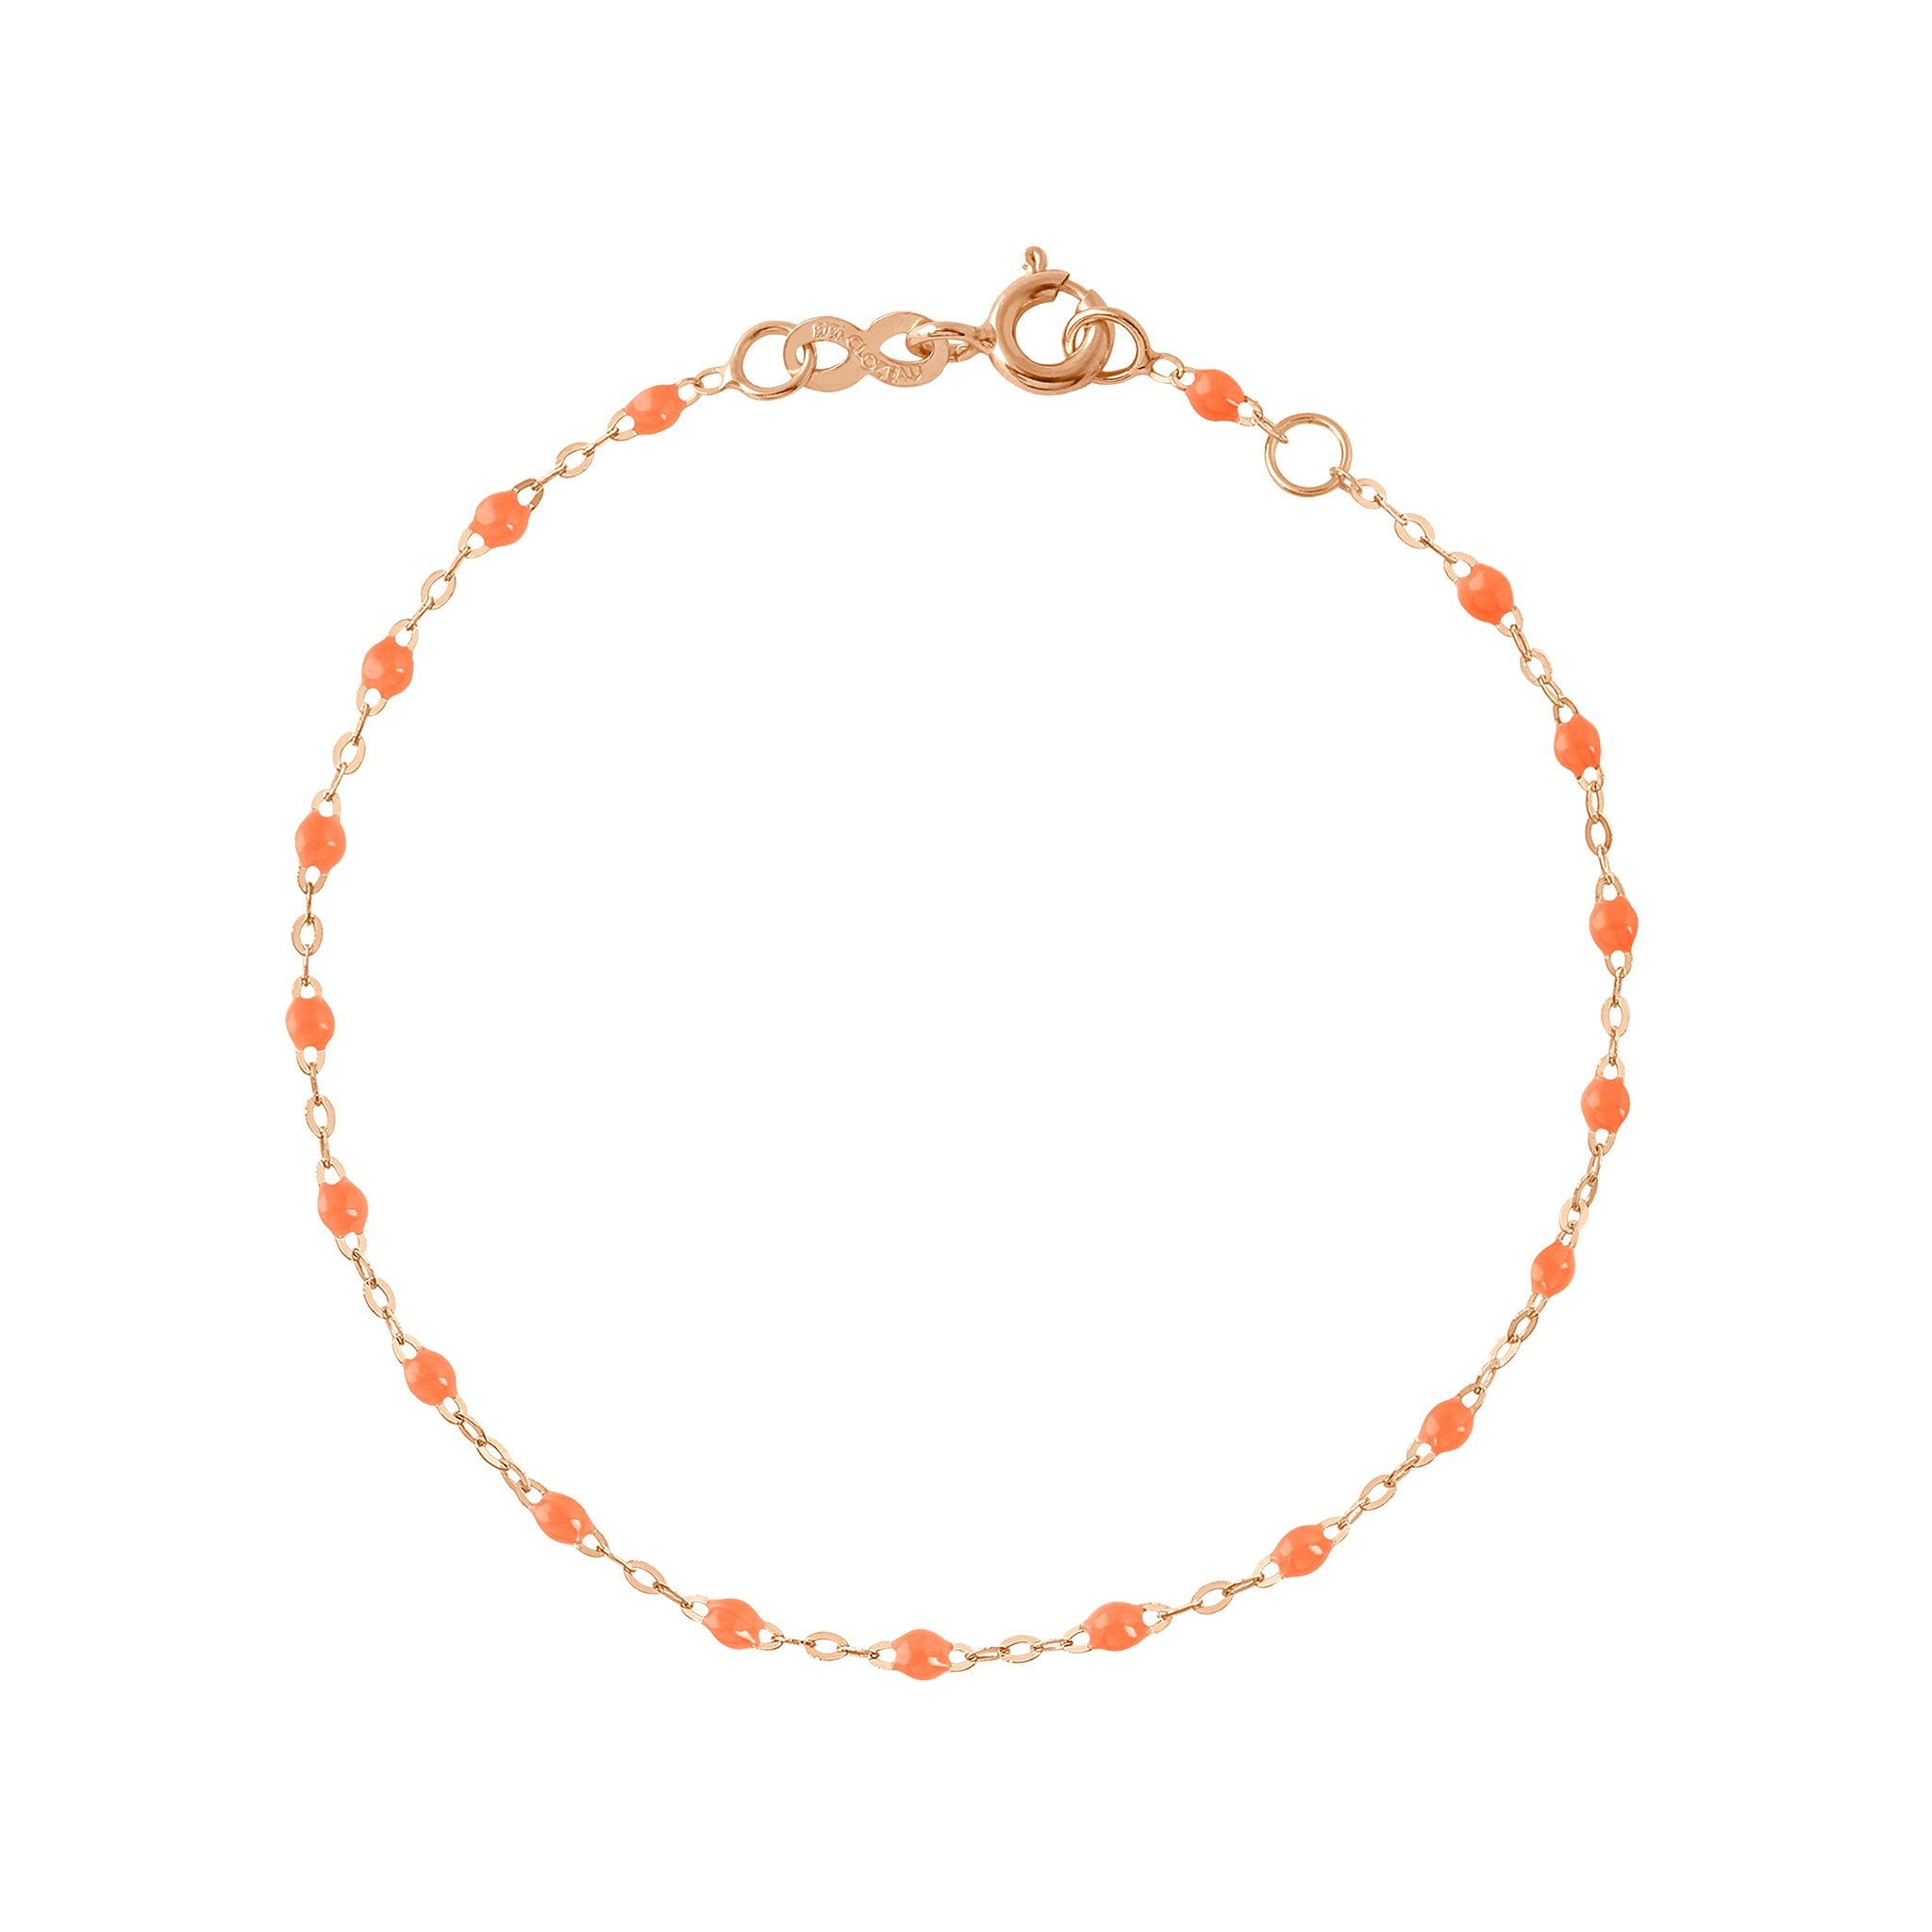 Beaded Orange and White Checkerboard Adjustable Bracelet | Adjustable  bracelet, Bracelet sizes, Beaded